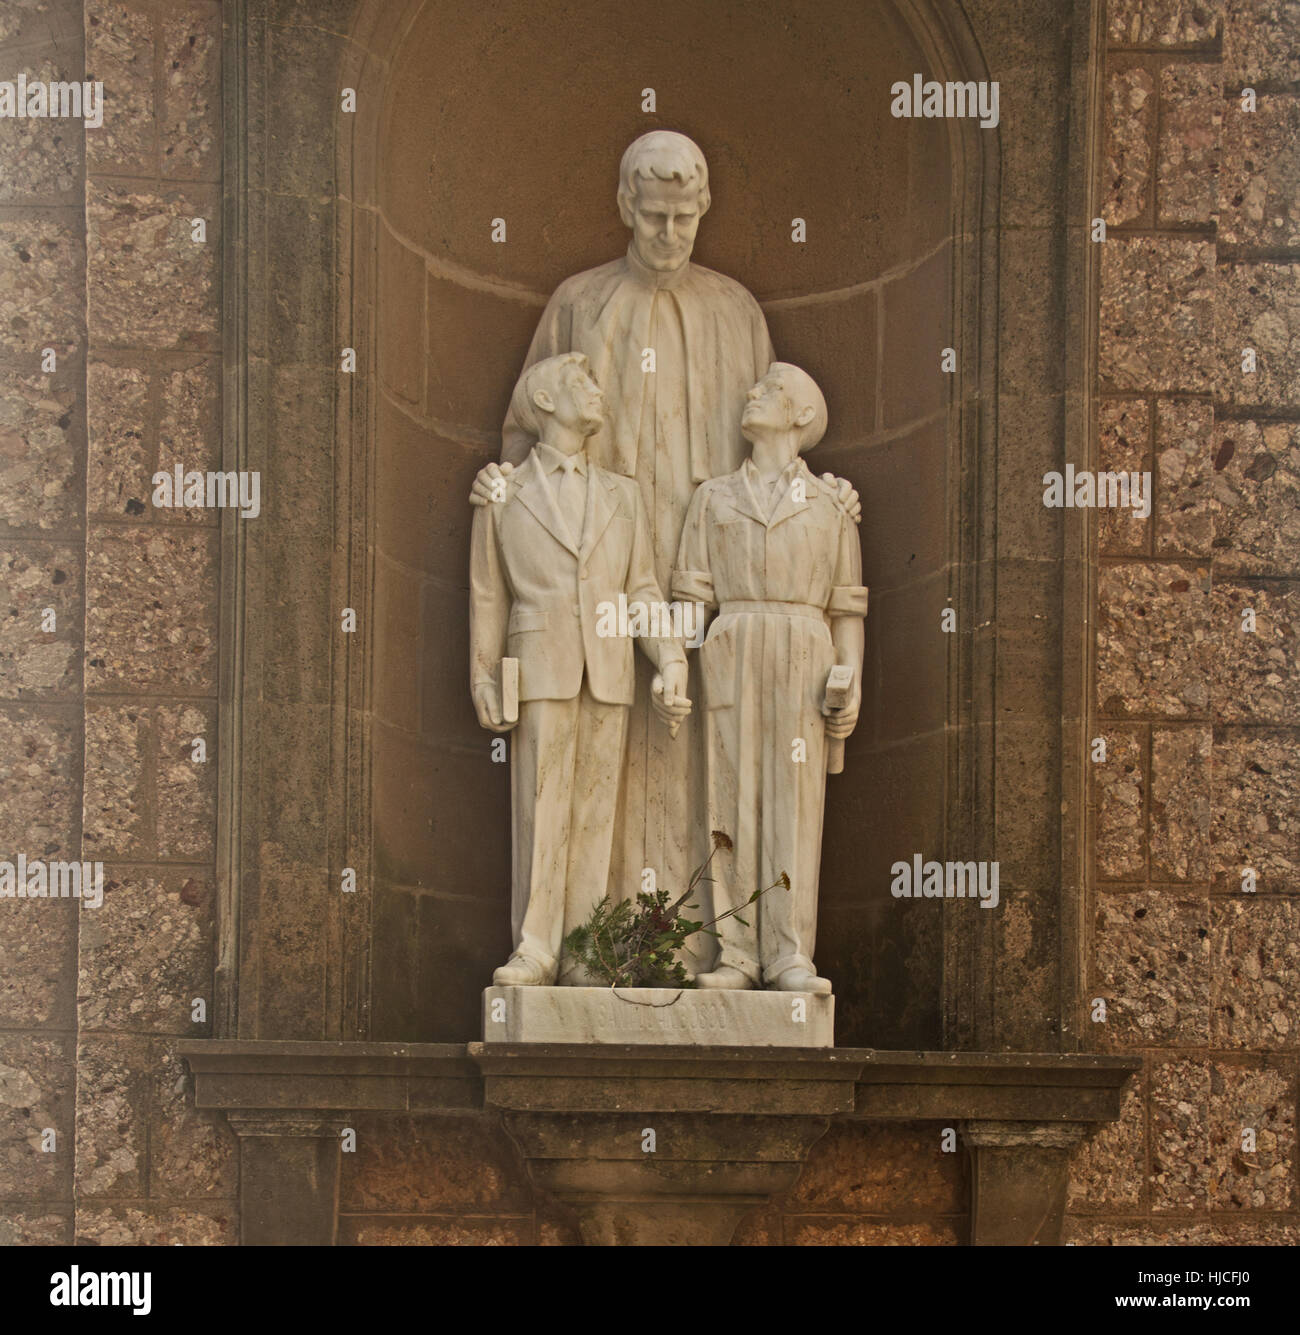 Statue in Niche, Cove, Montserrat Monastery, Abbey Santa Maria, Royal Basilica, Spain, Europe Stock Photo